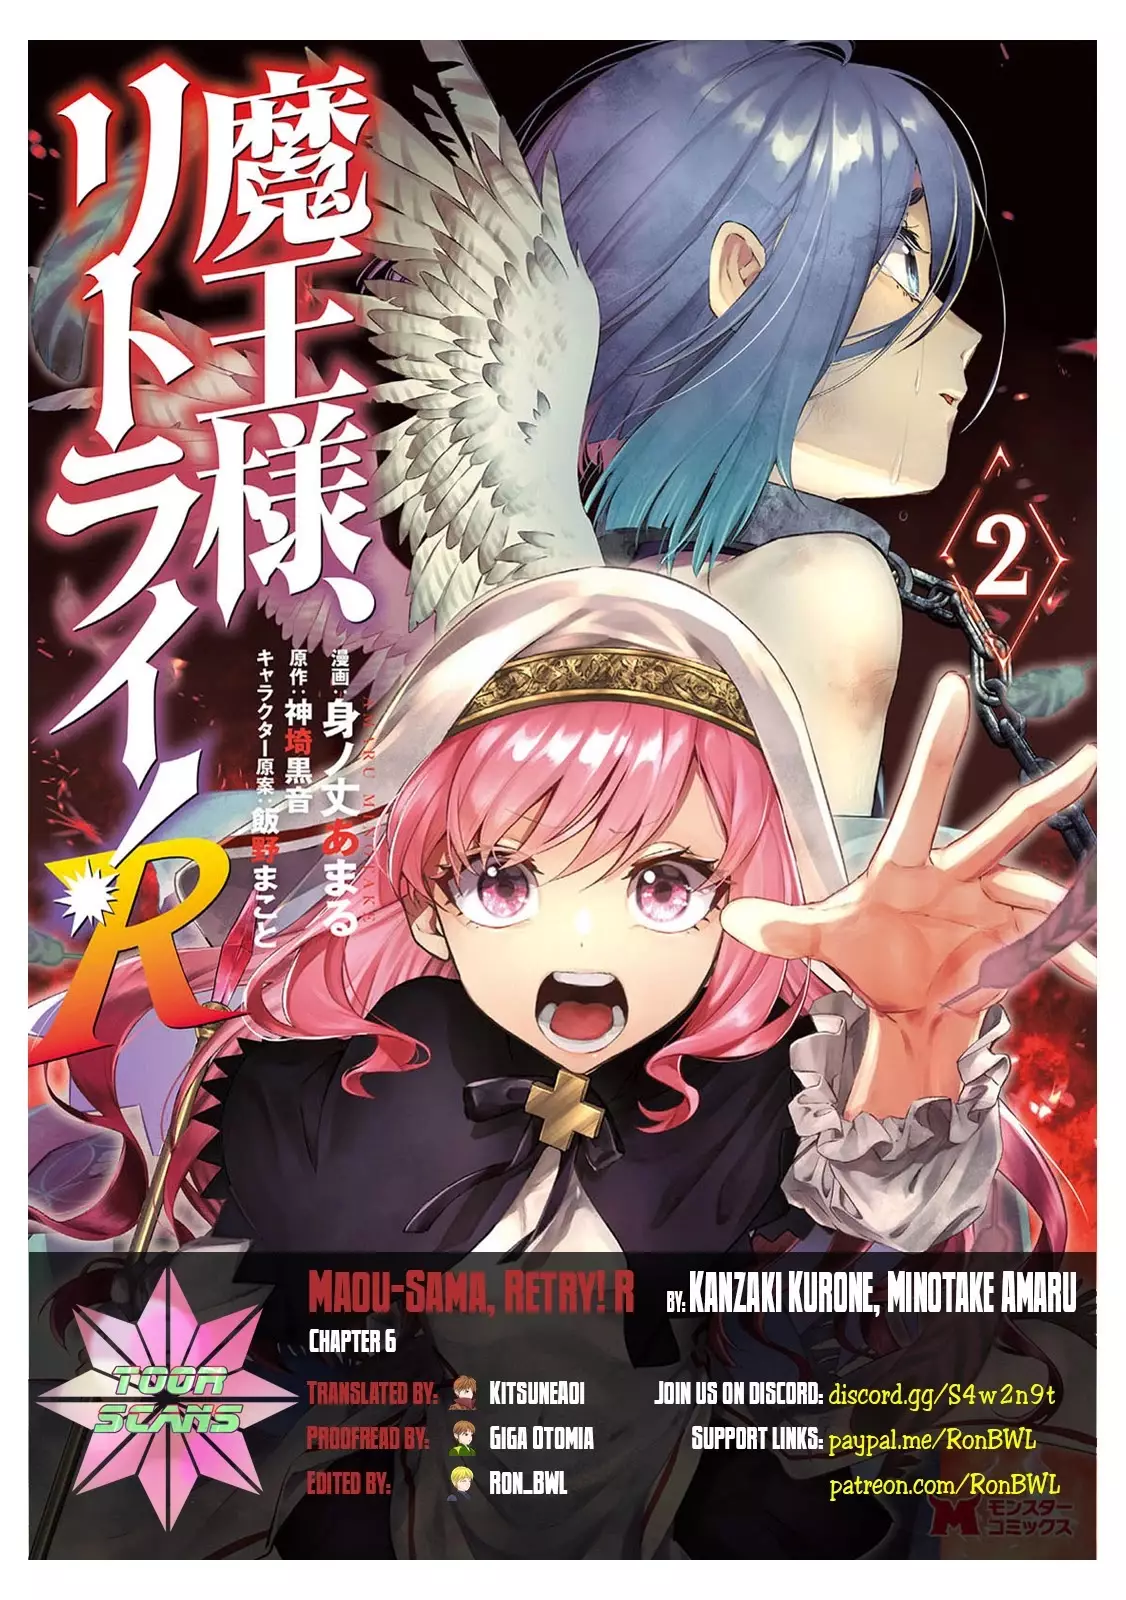 DISC] Maou-sama, Retry! R - Vol. 6 Ch. 30 : r/manga